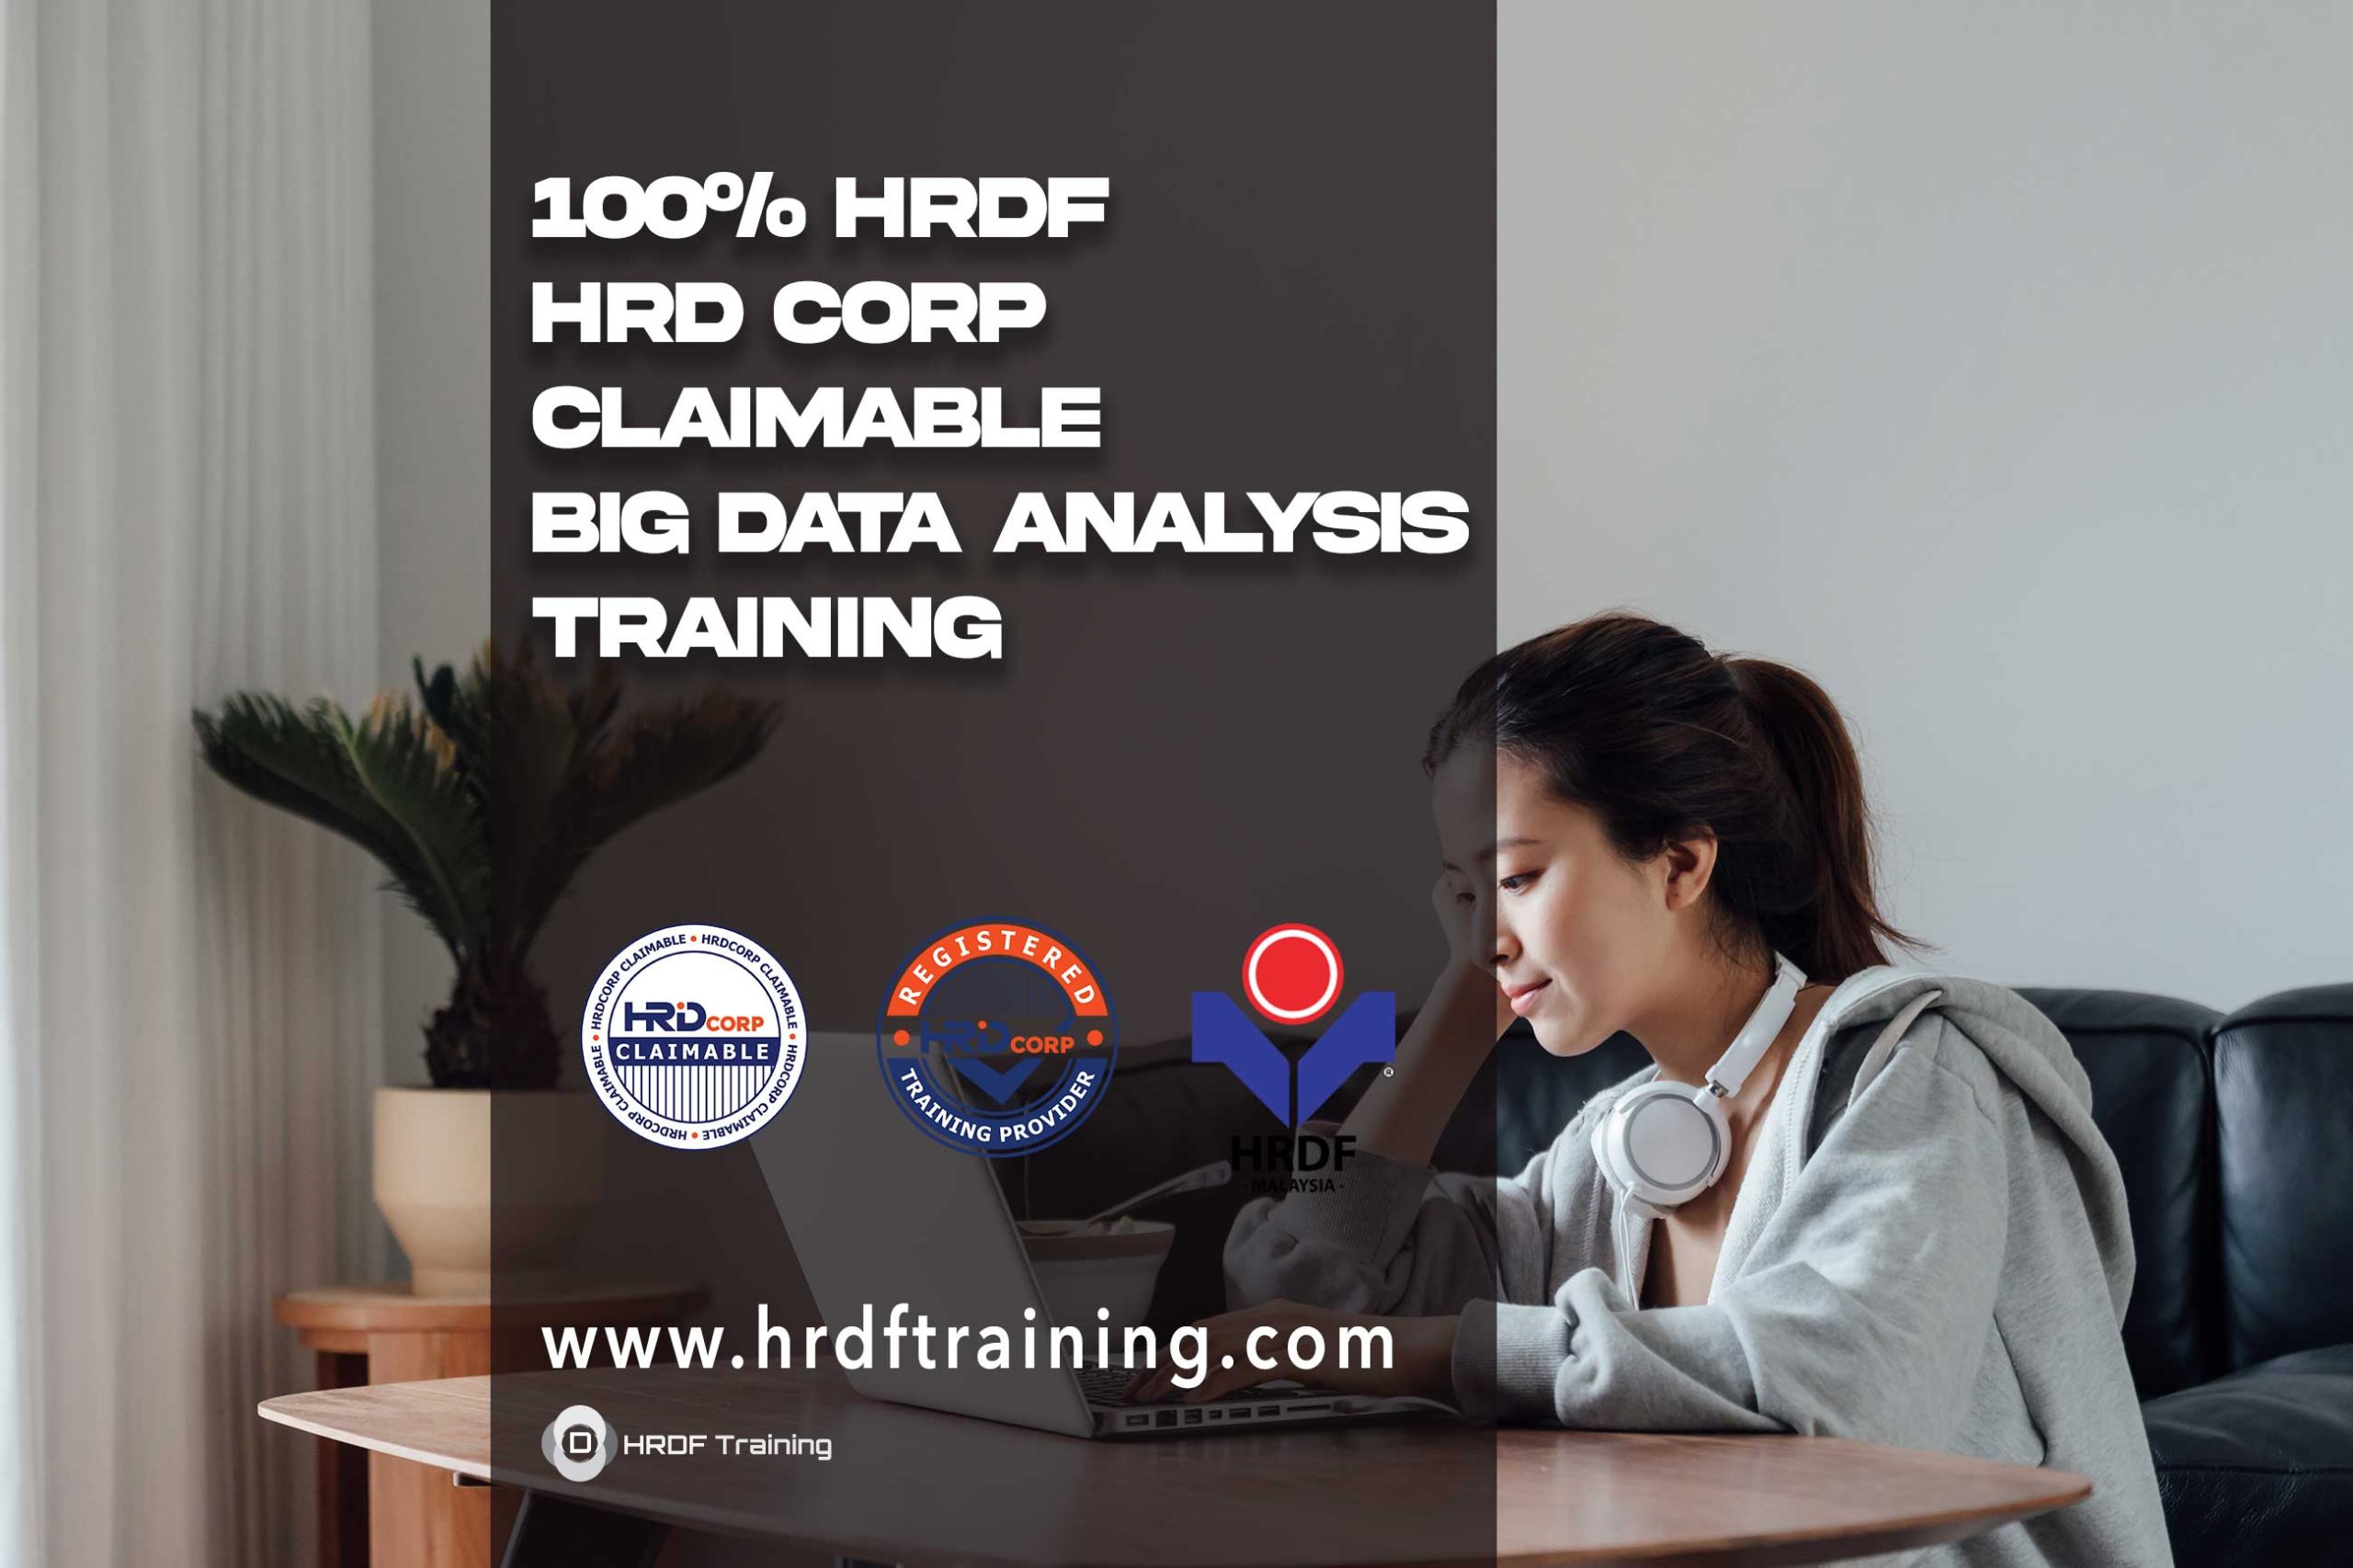 HRDF-HRD-Corp-Claimable-Big-Data-Analysis-Training